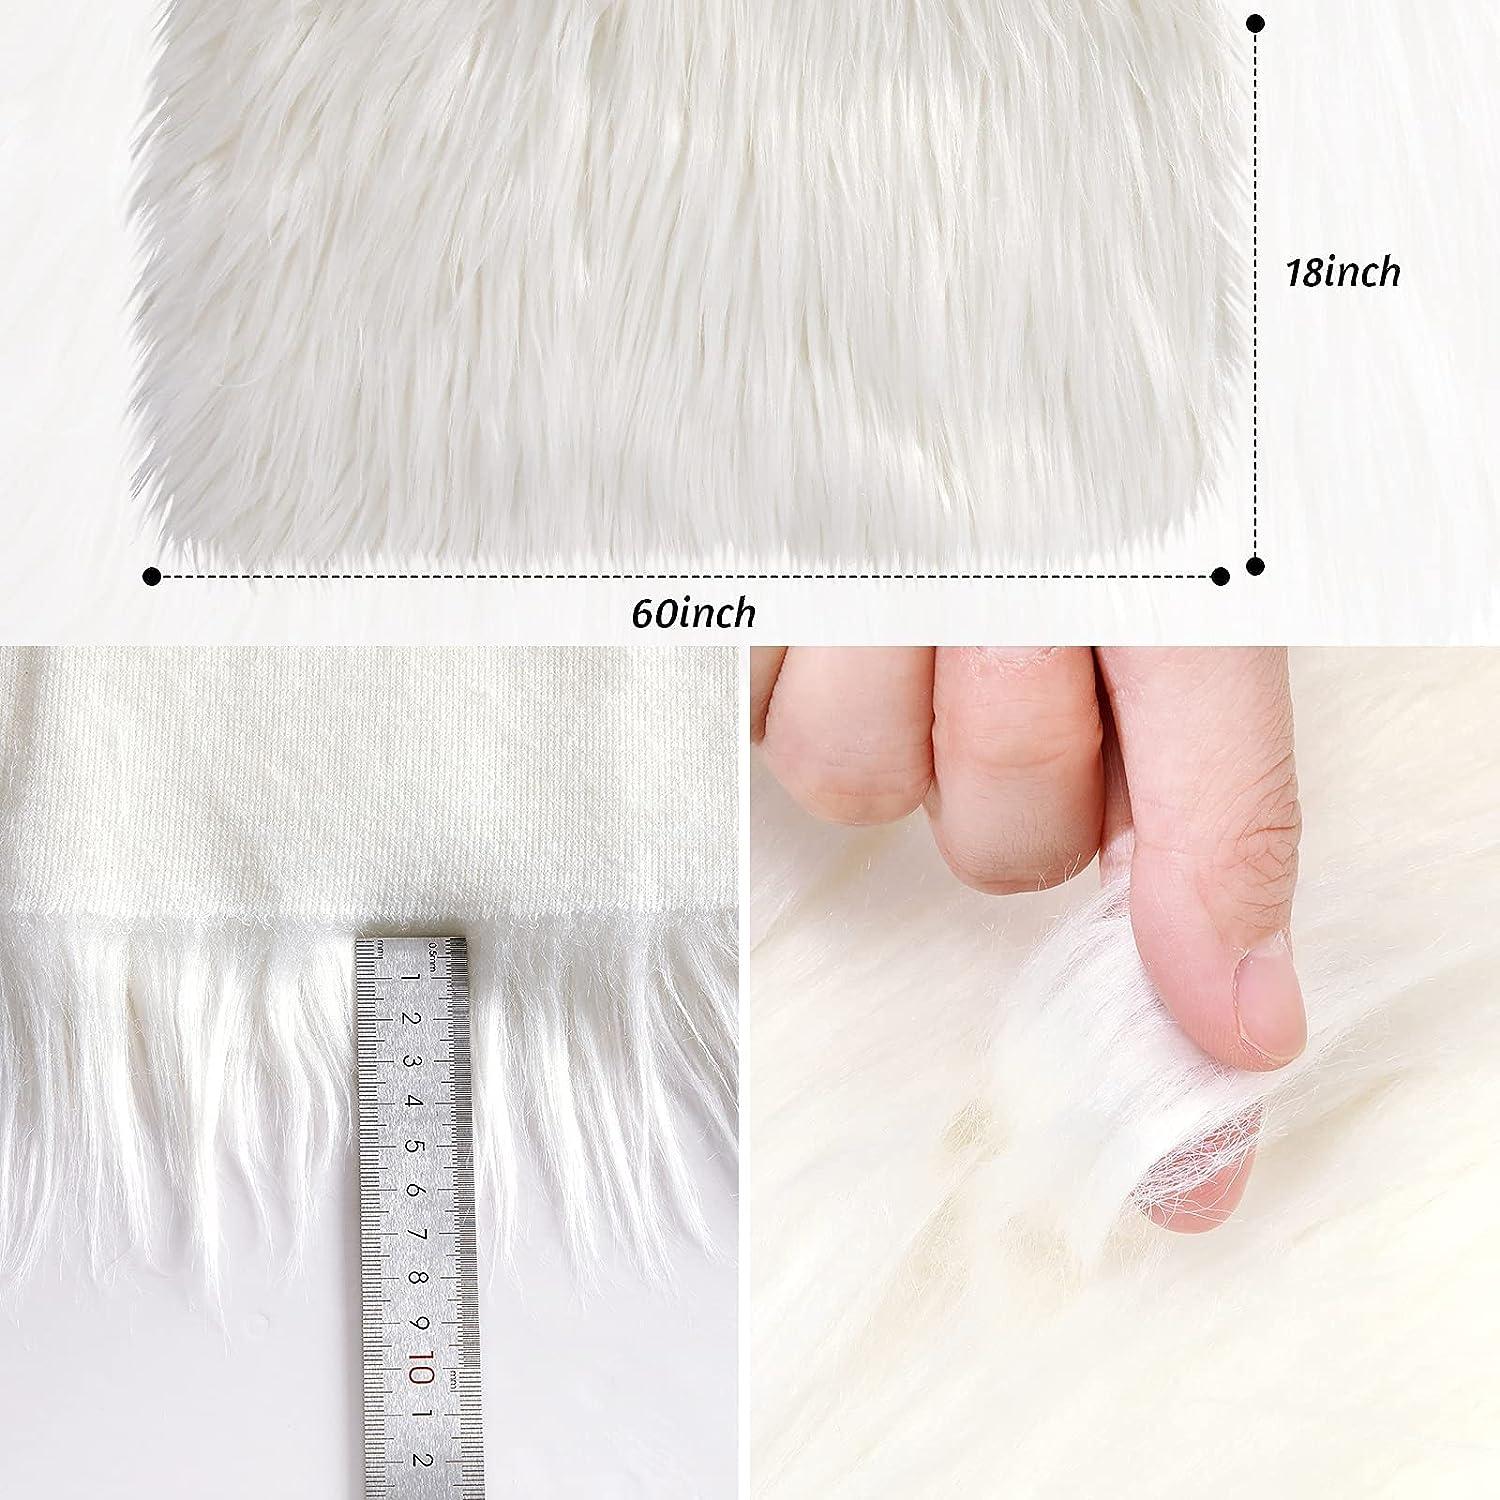 Faux Fur Fabric Sewing, Imitation Fur Fabric